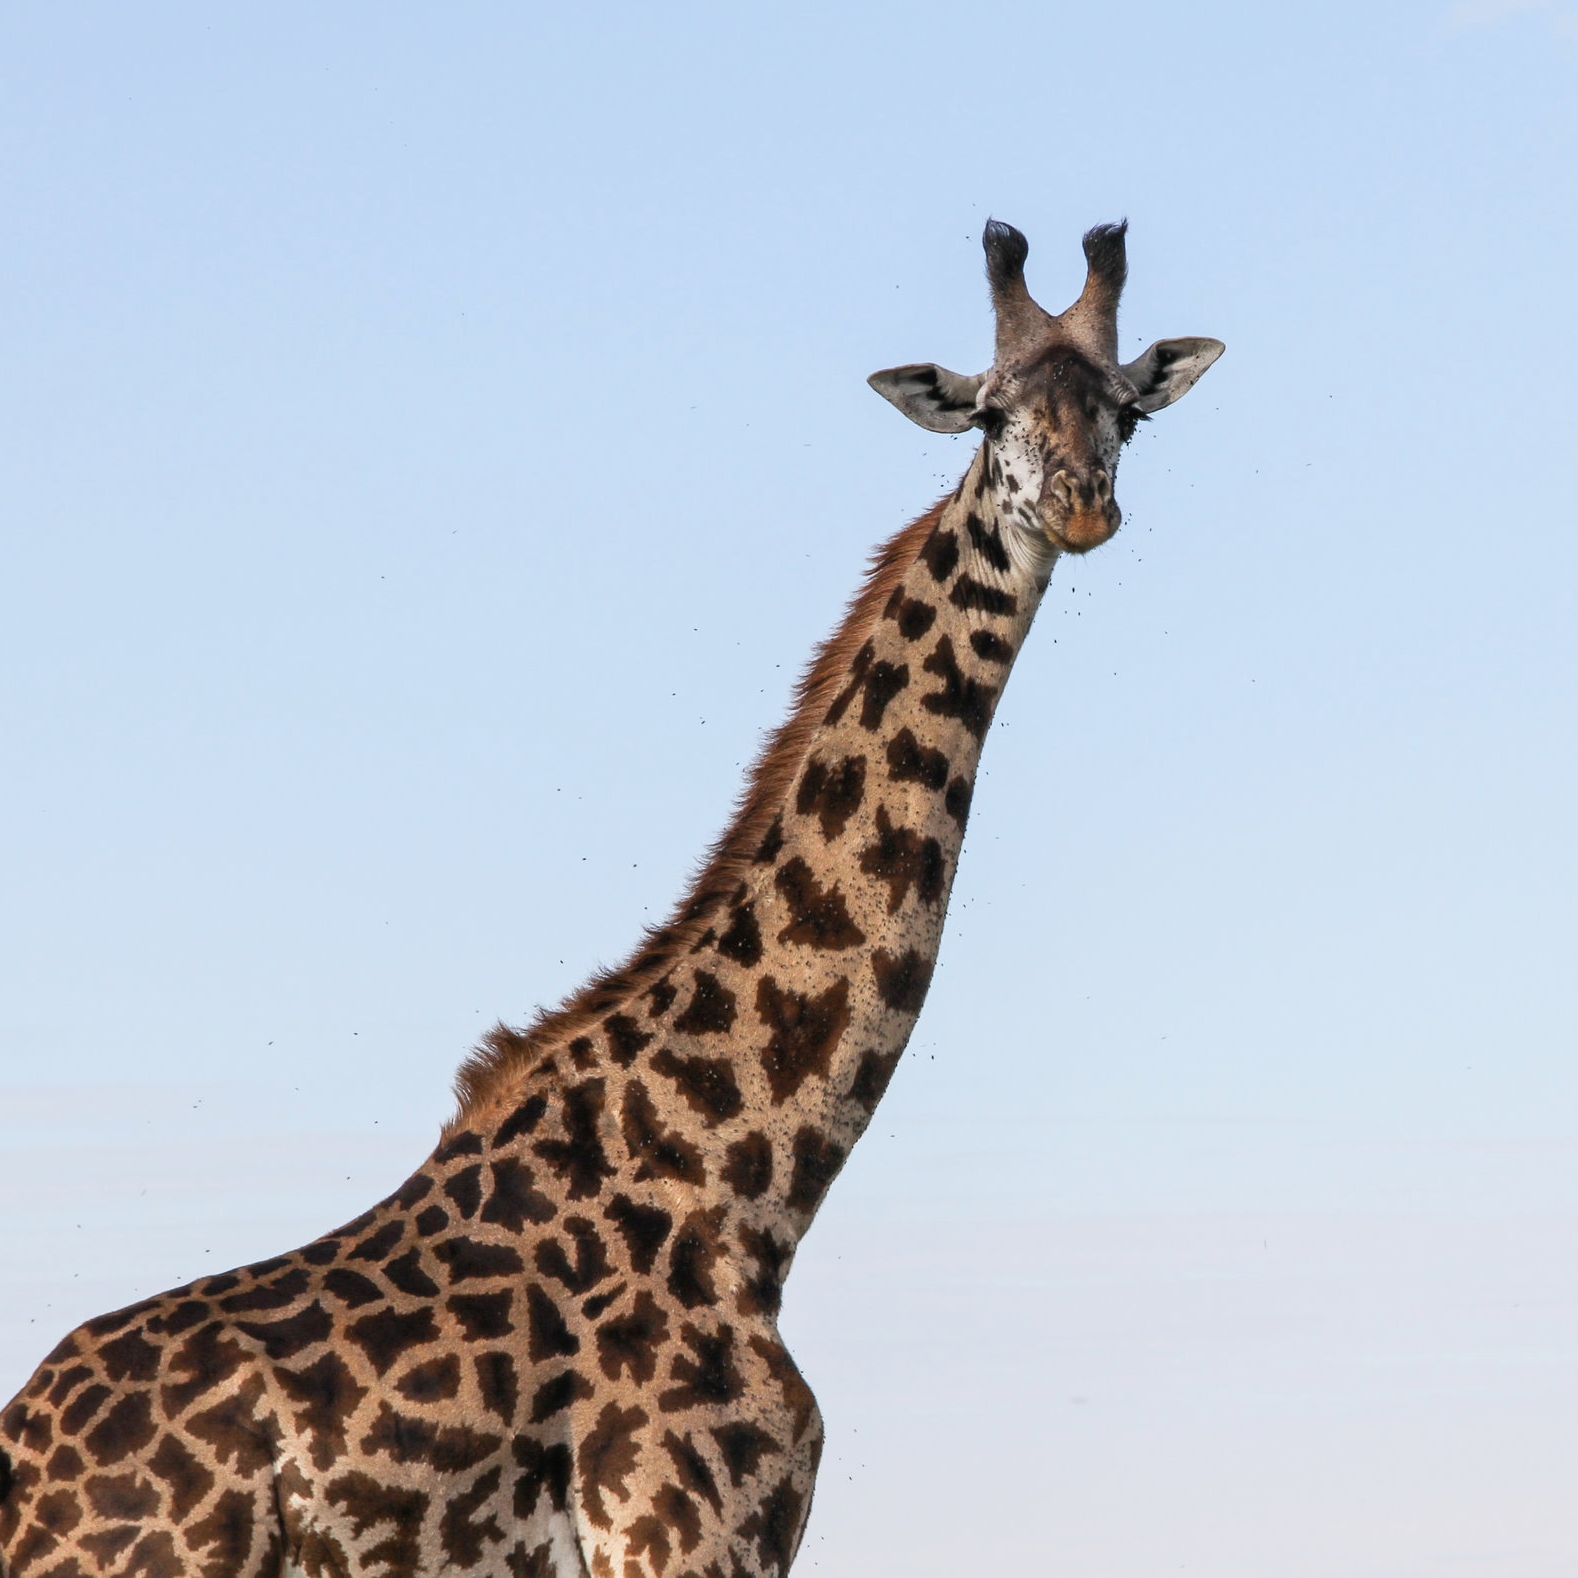 FUSION: Giraffes Face 'Silent Extinction'